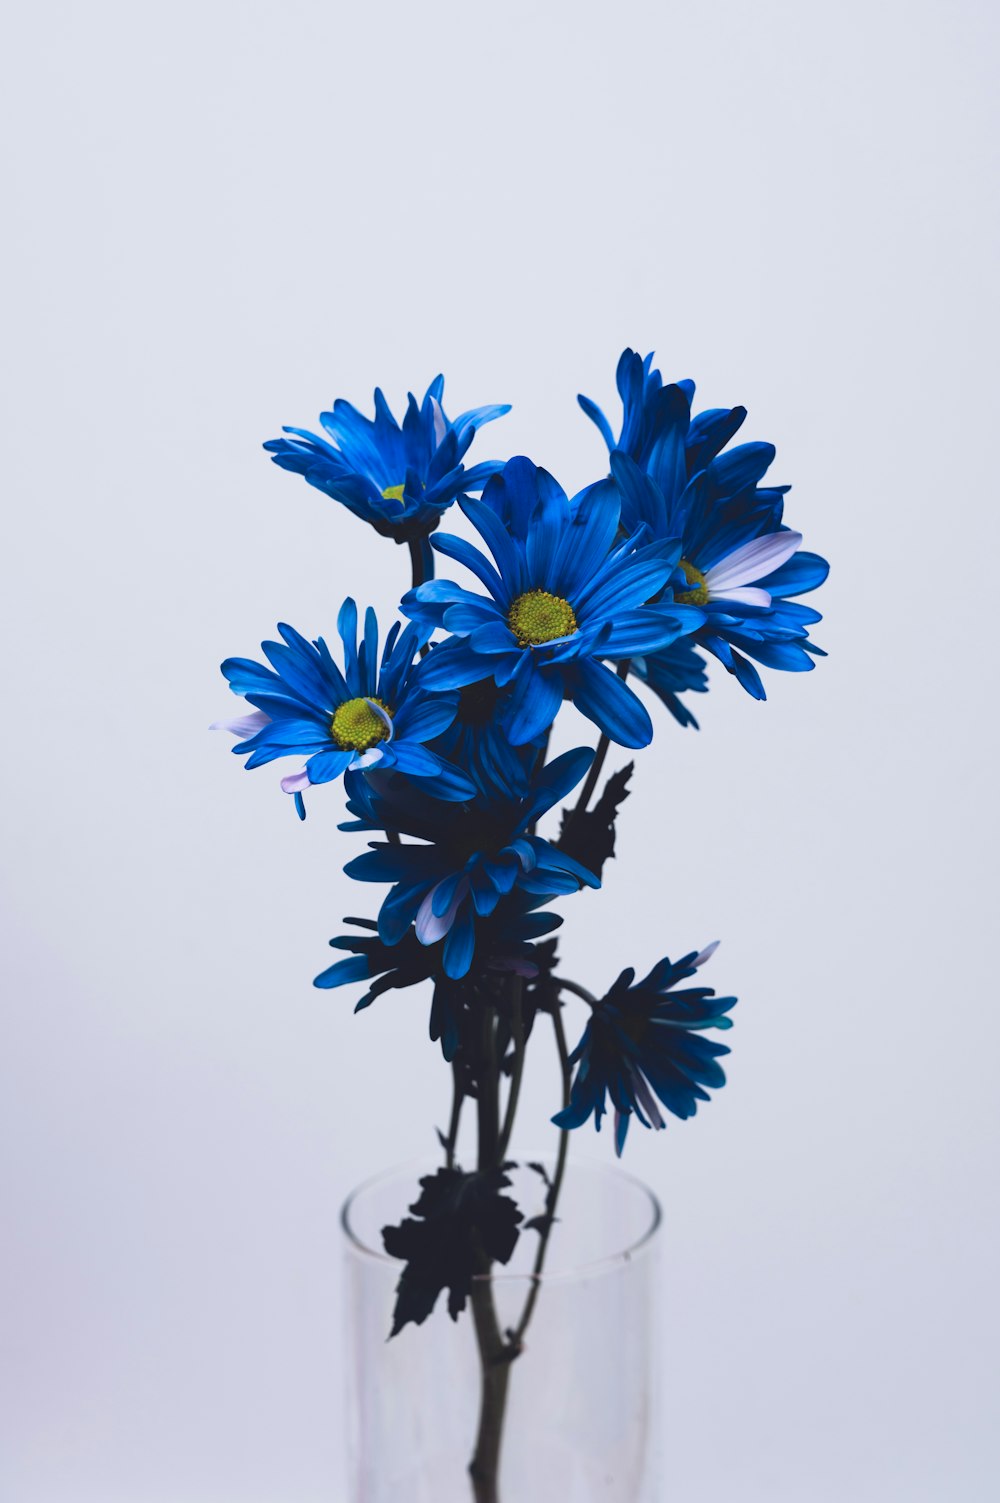 500+ Flower Images [HQ] | Download Free Flower Pictures on Unsplash